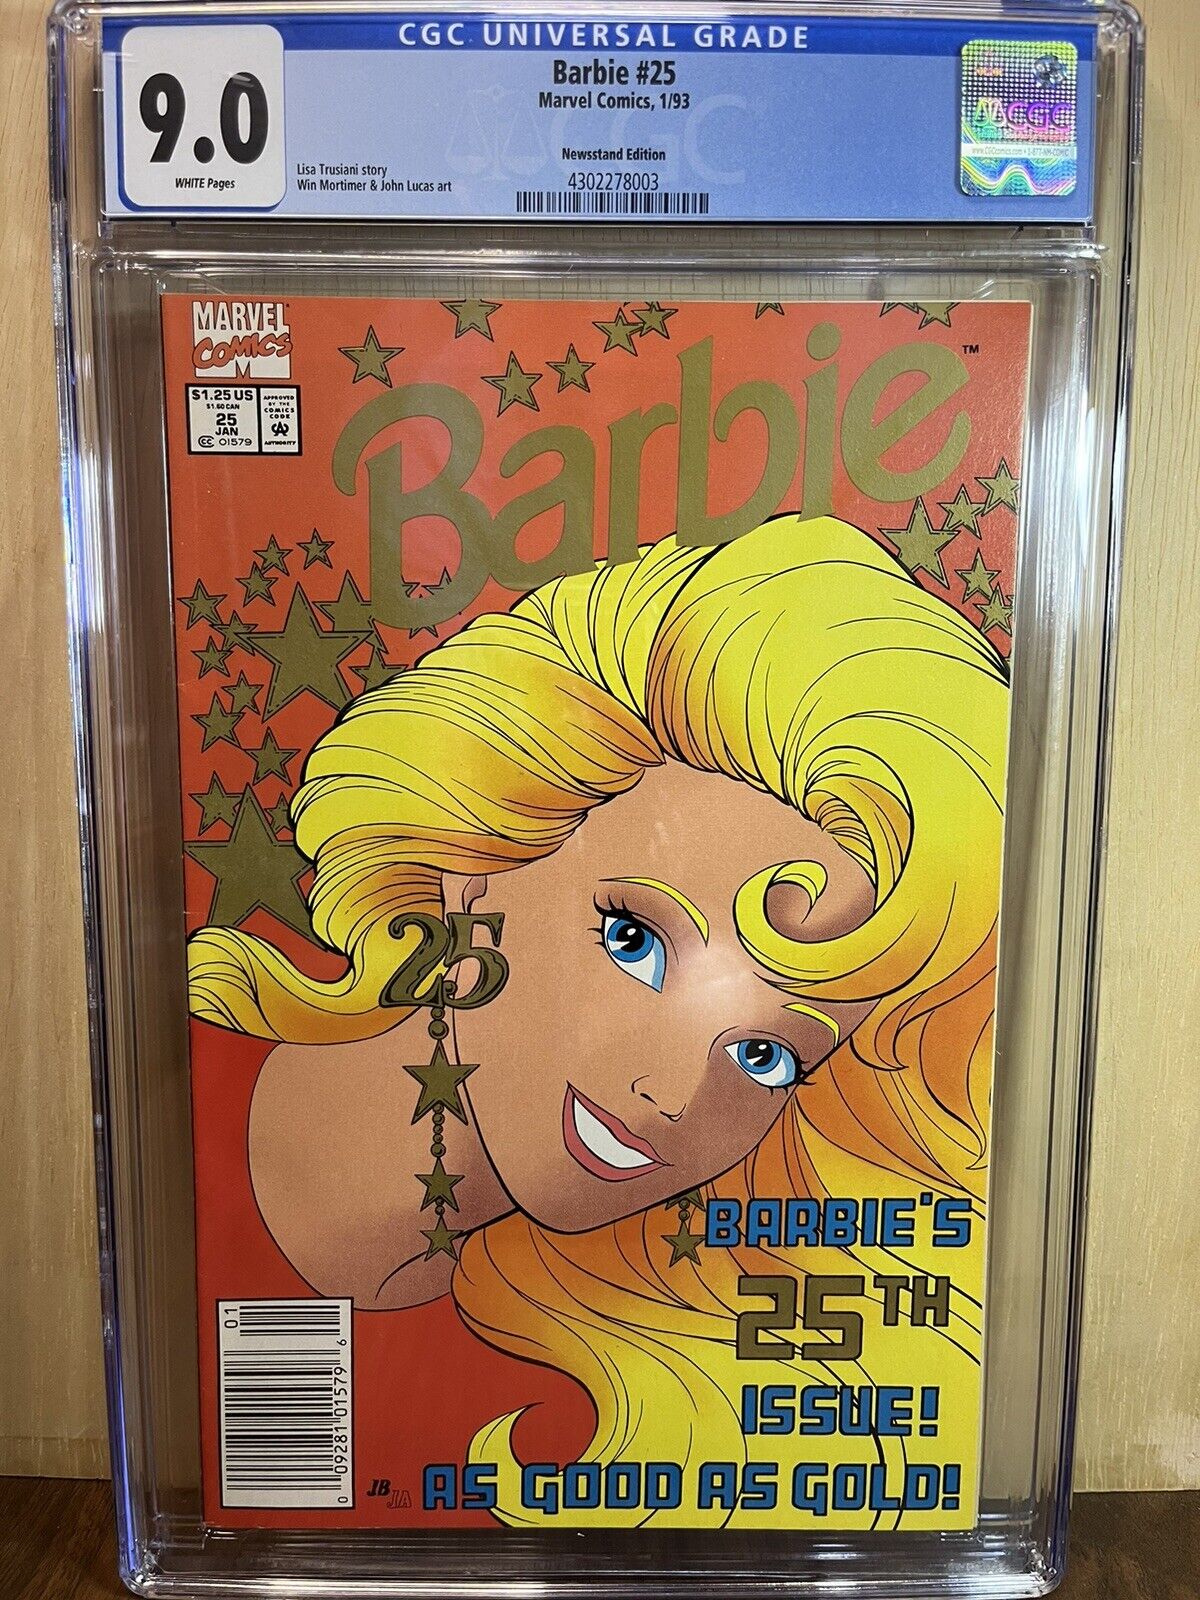 CGC 9.0 Barbie #25 Newsstand Edition Marvel Comics 1993 TOP POP